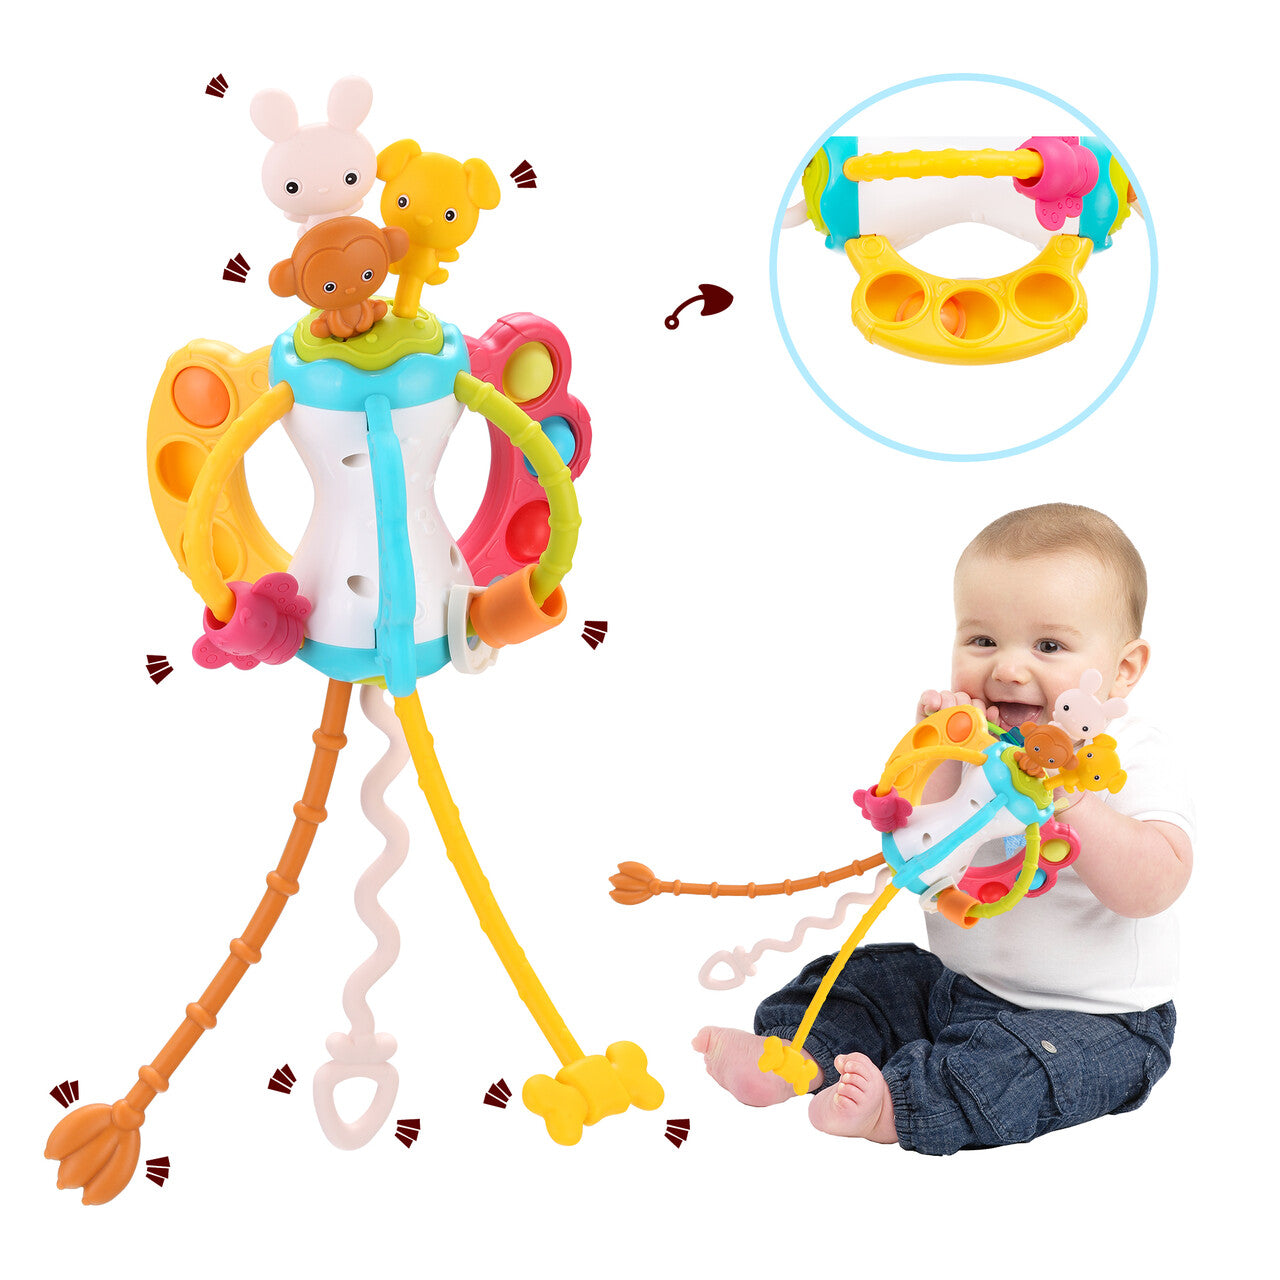 【Christmas sale】Montessori Baby Sensory Toys